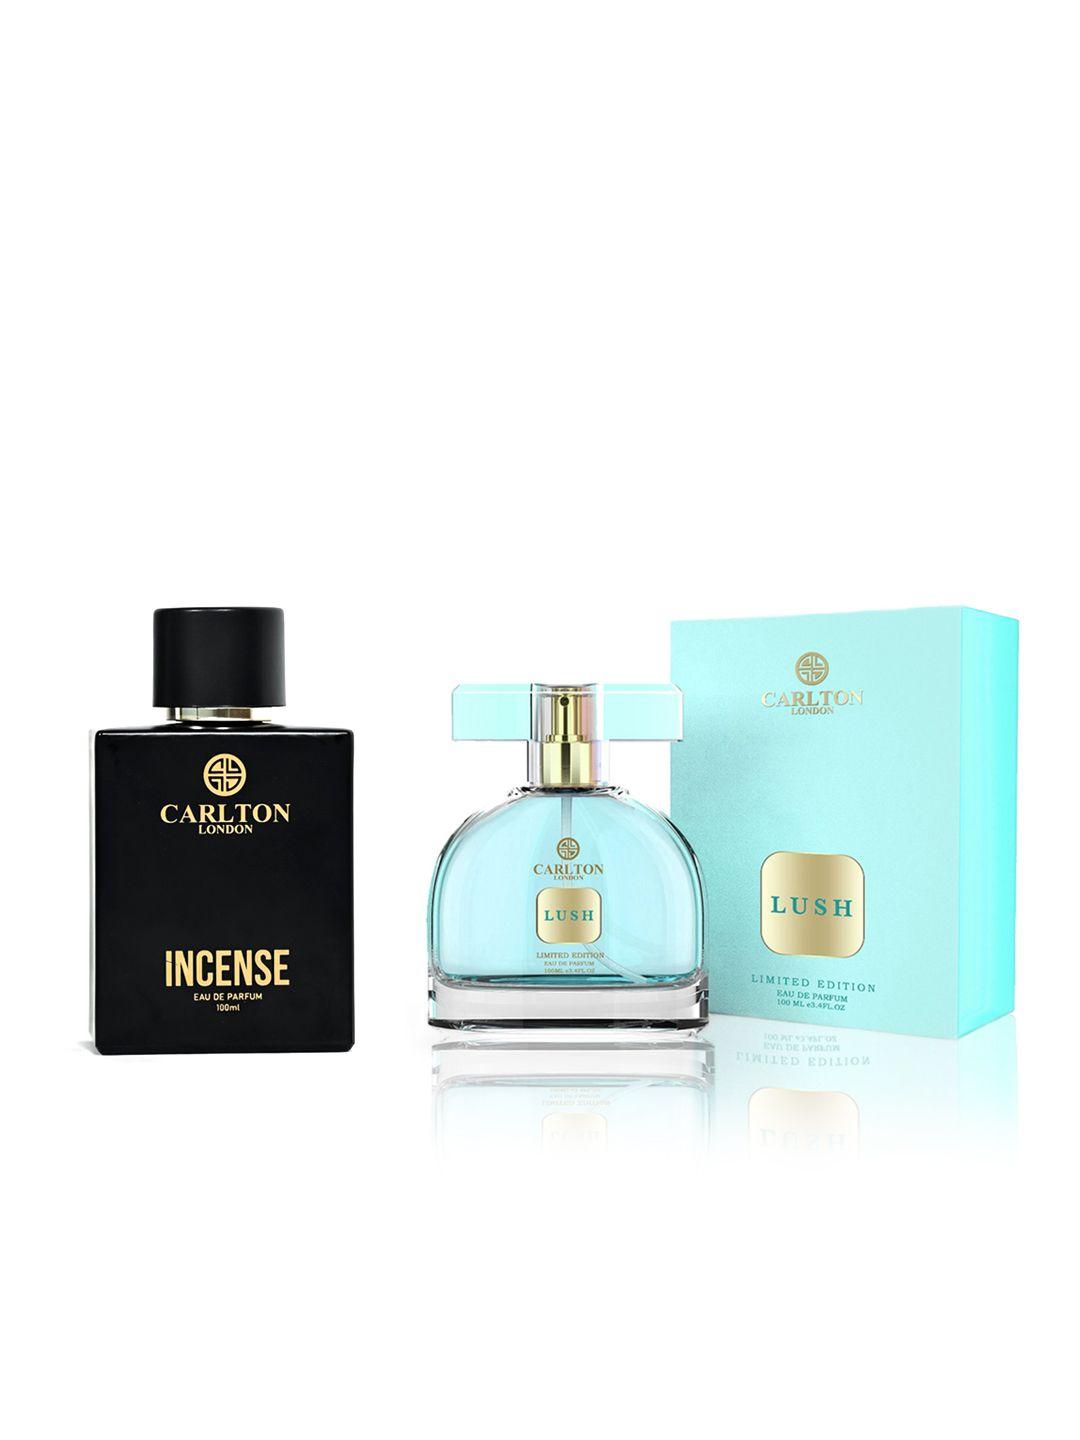 carlton london set of 2 eau de parfum 100ml each - incense + lush